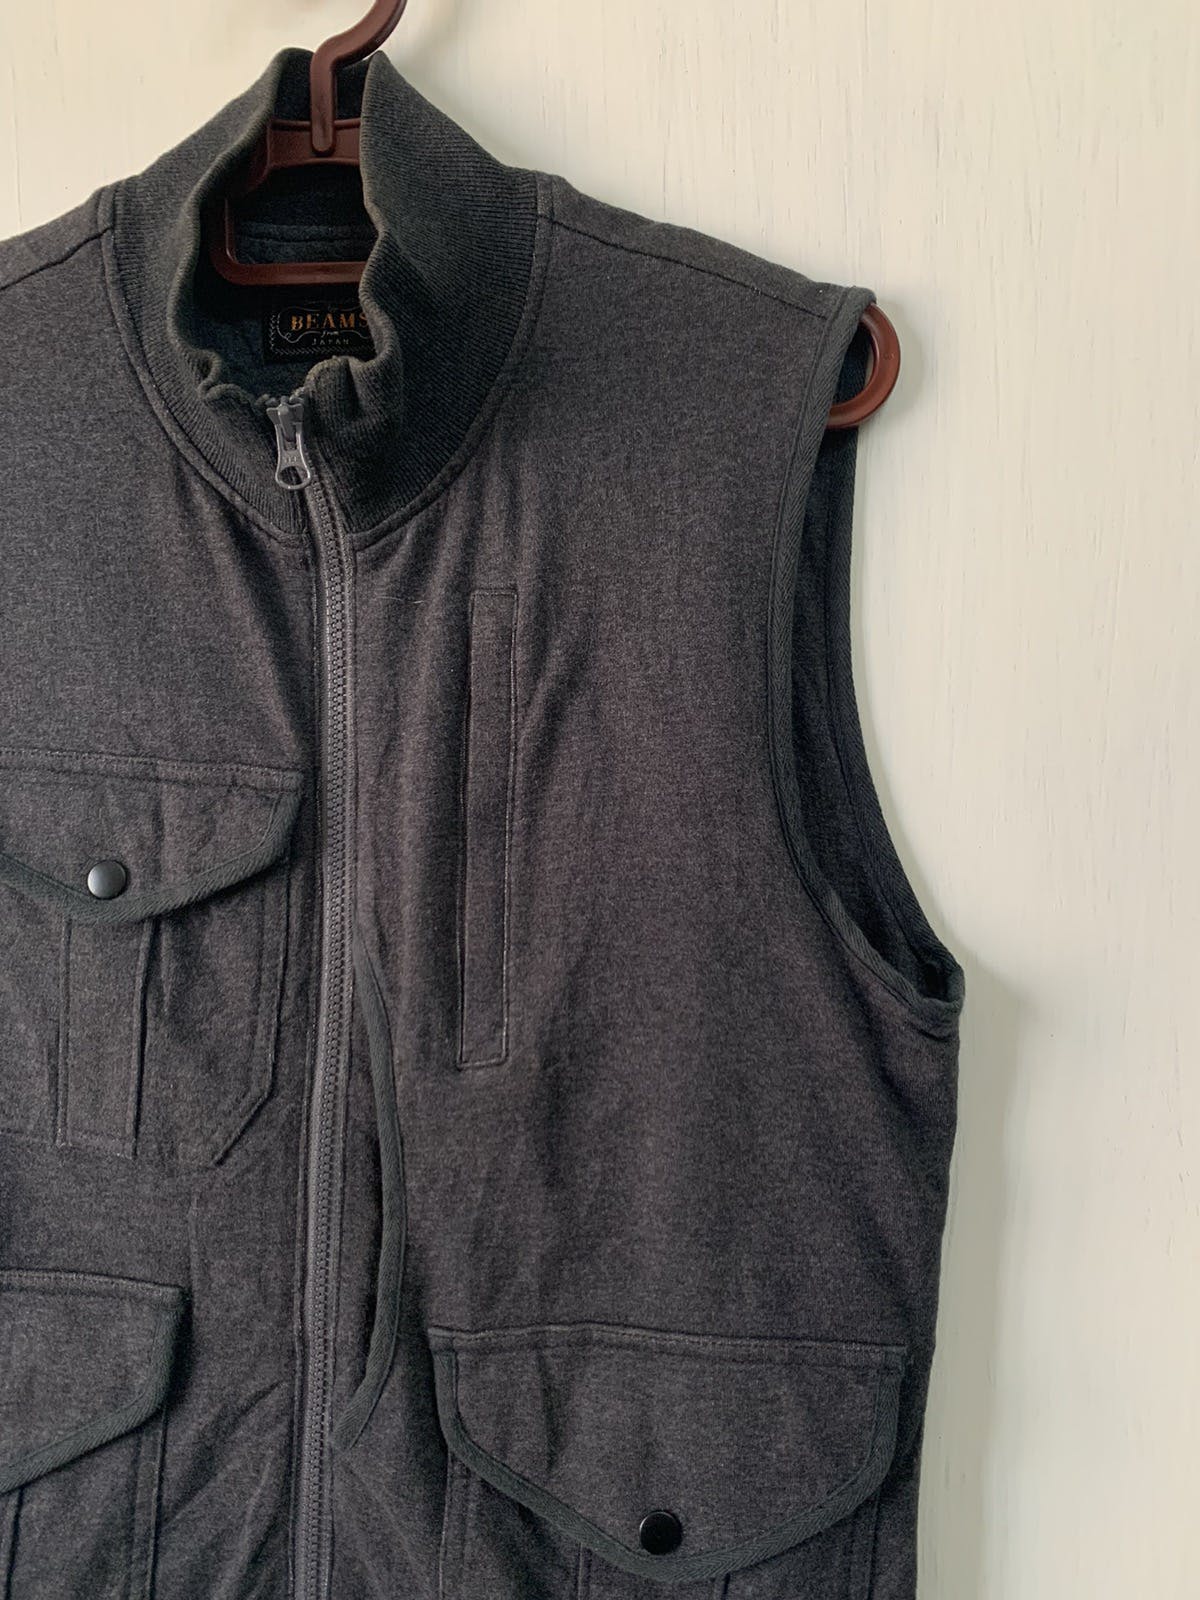 Beams Plus From Japan Sleeveles Jacket/Vest Multipockets - 4